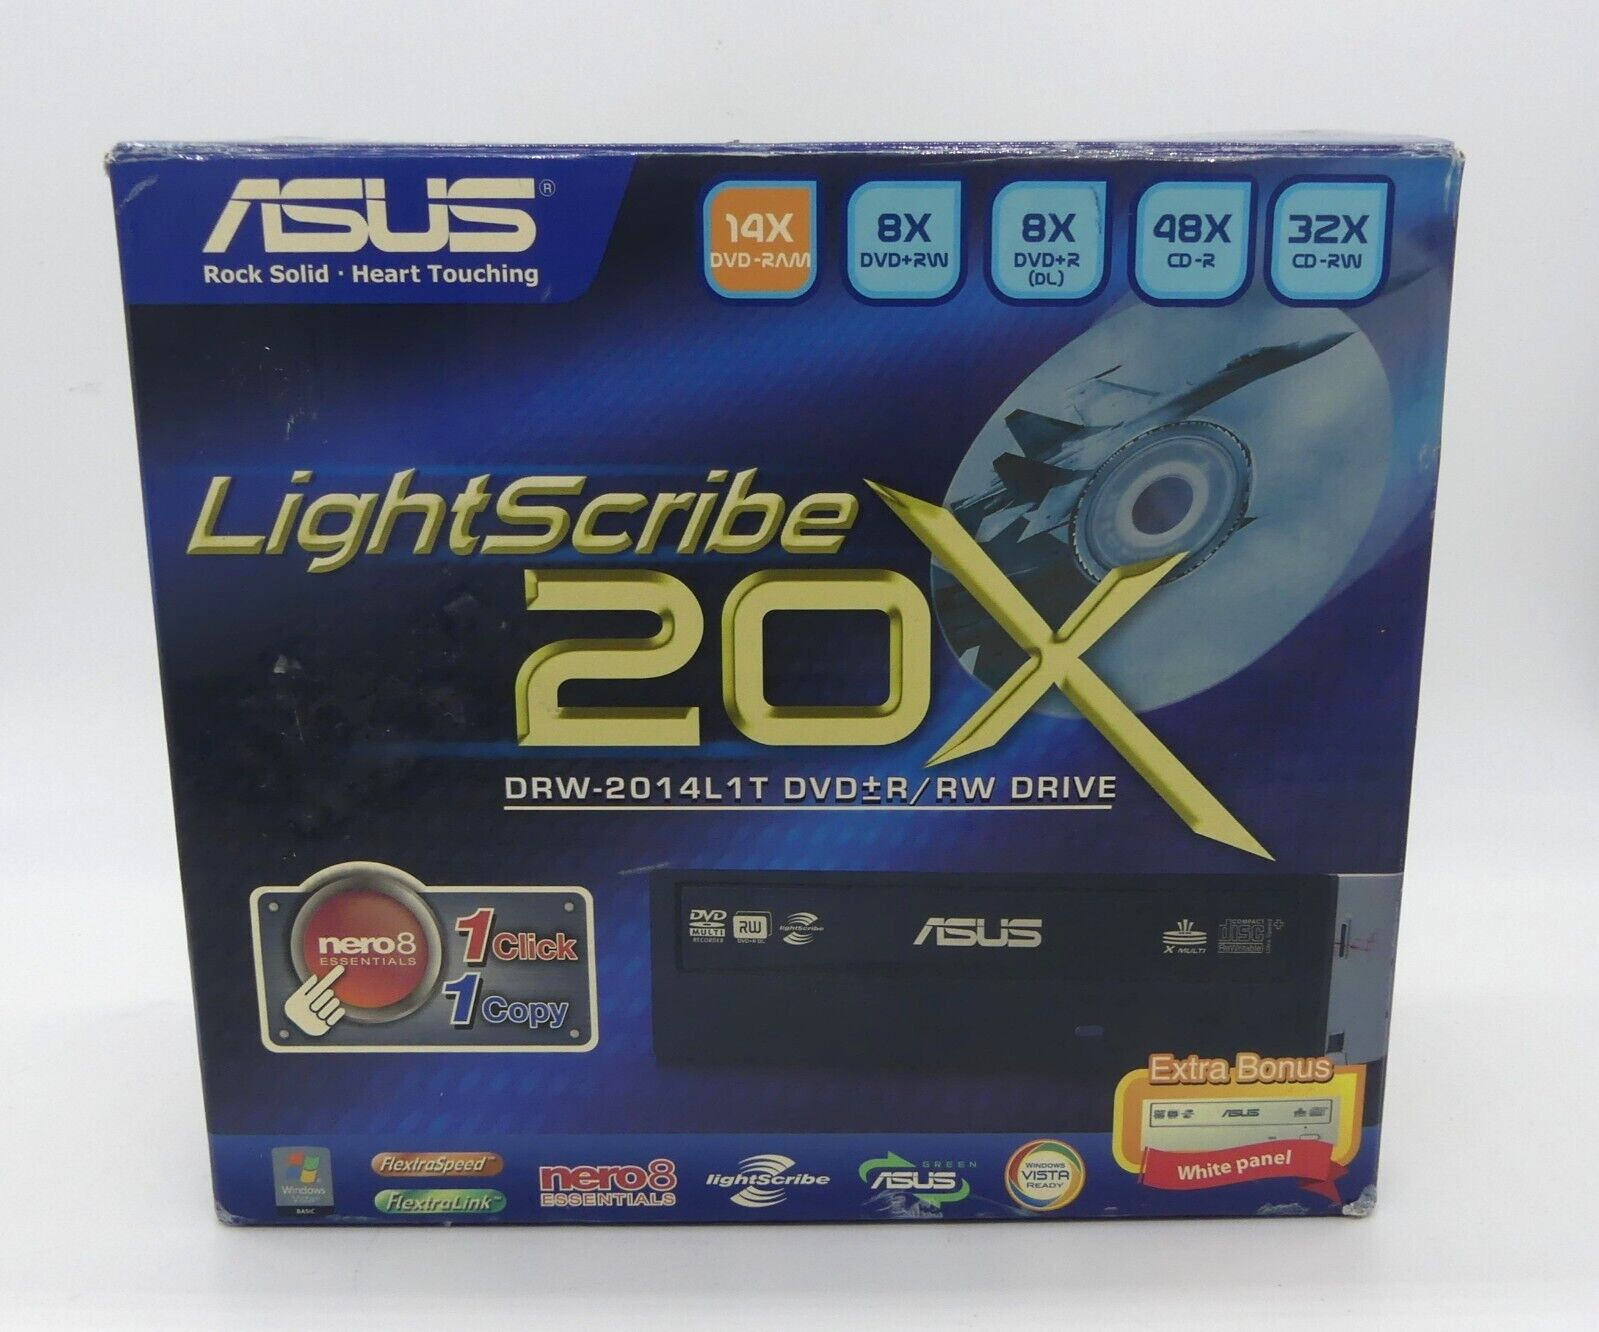 ASUS DRW-2014L1T, DVD+R, RW Drive, DVD Burner with LightScribe 20X